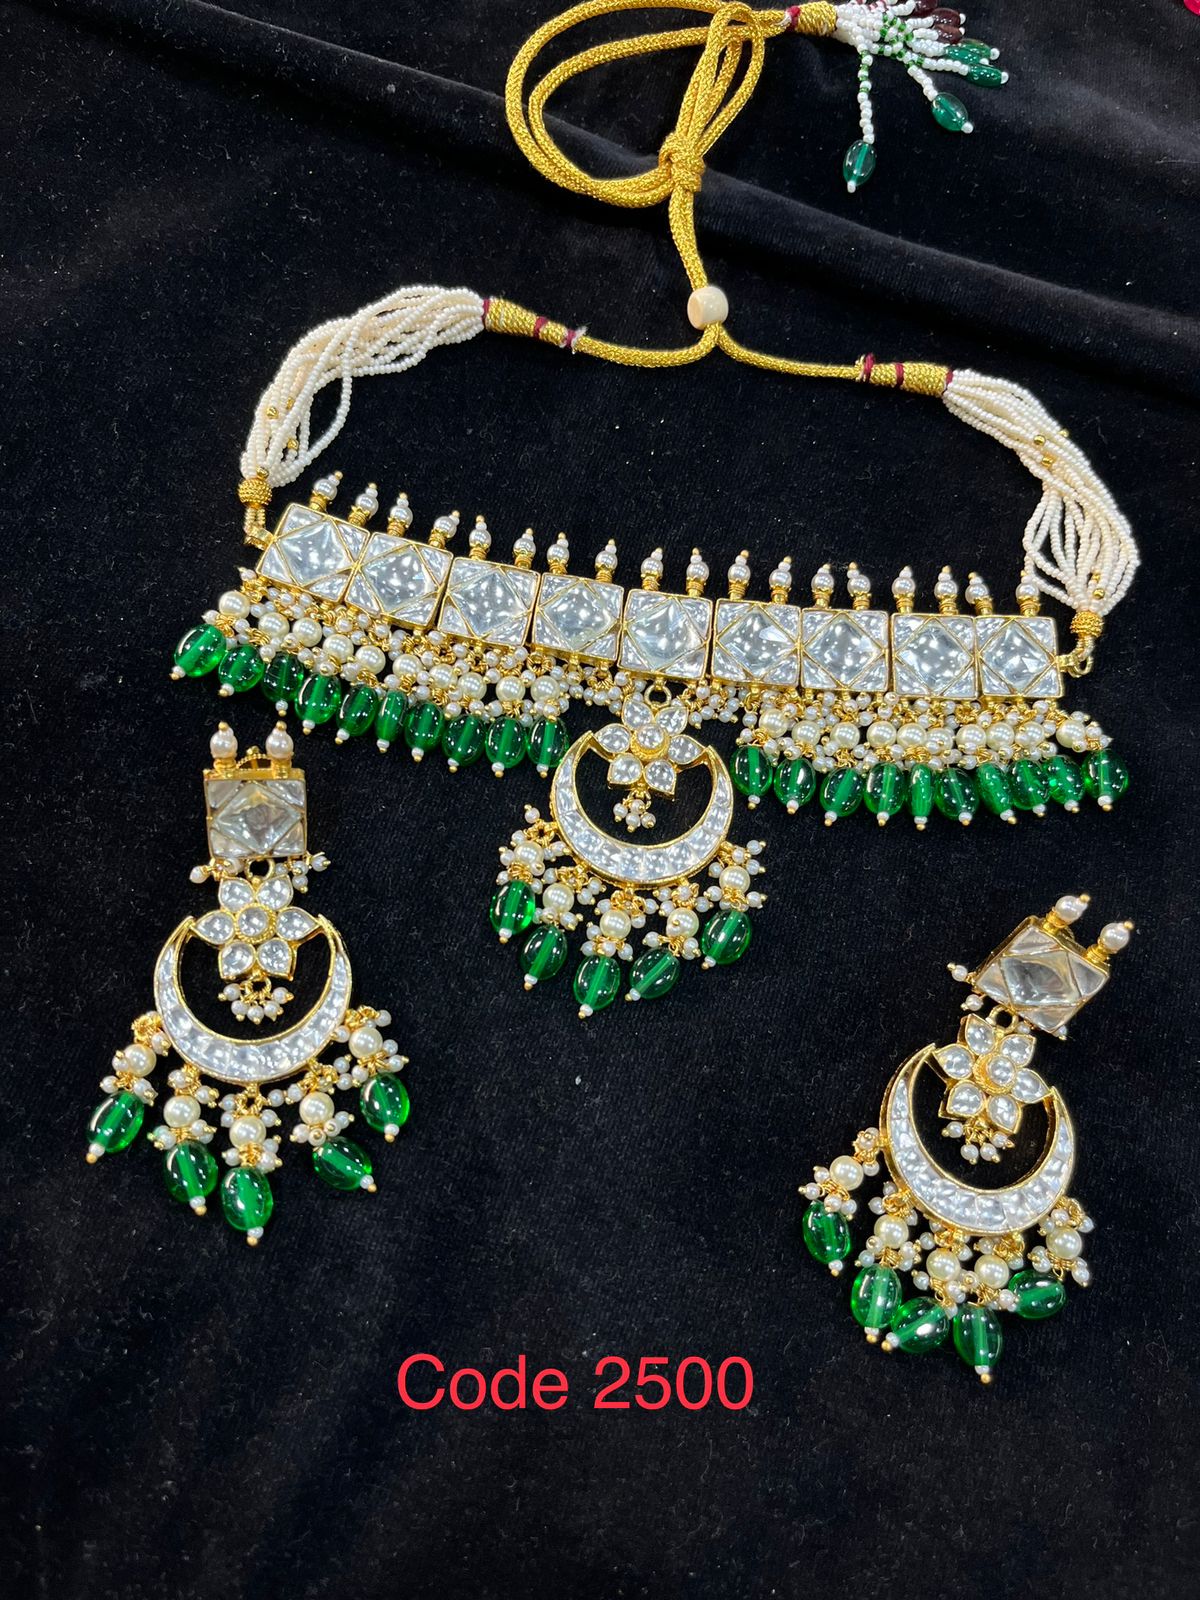 Pacheli Kundan Jewelry Necklace with earrings Sabyasachi Inspired Jadau Jewelry